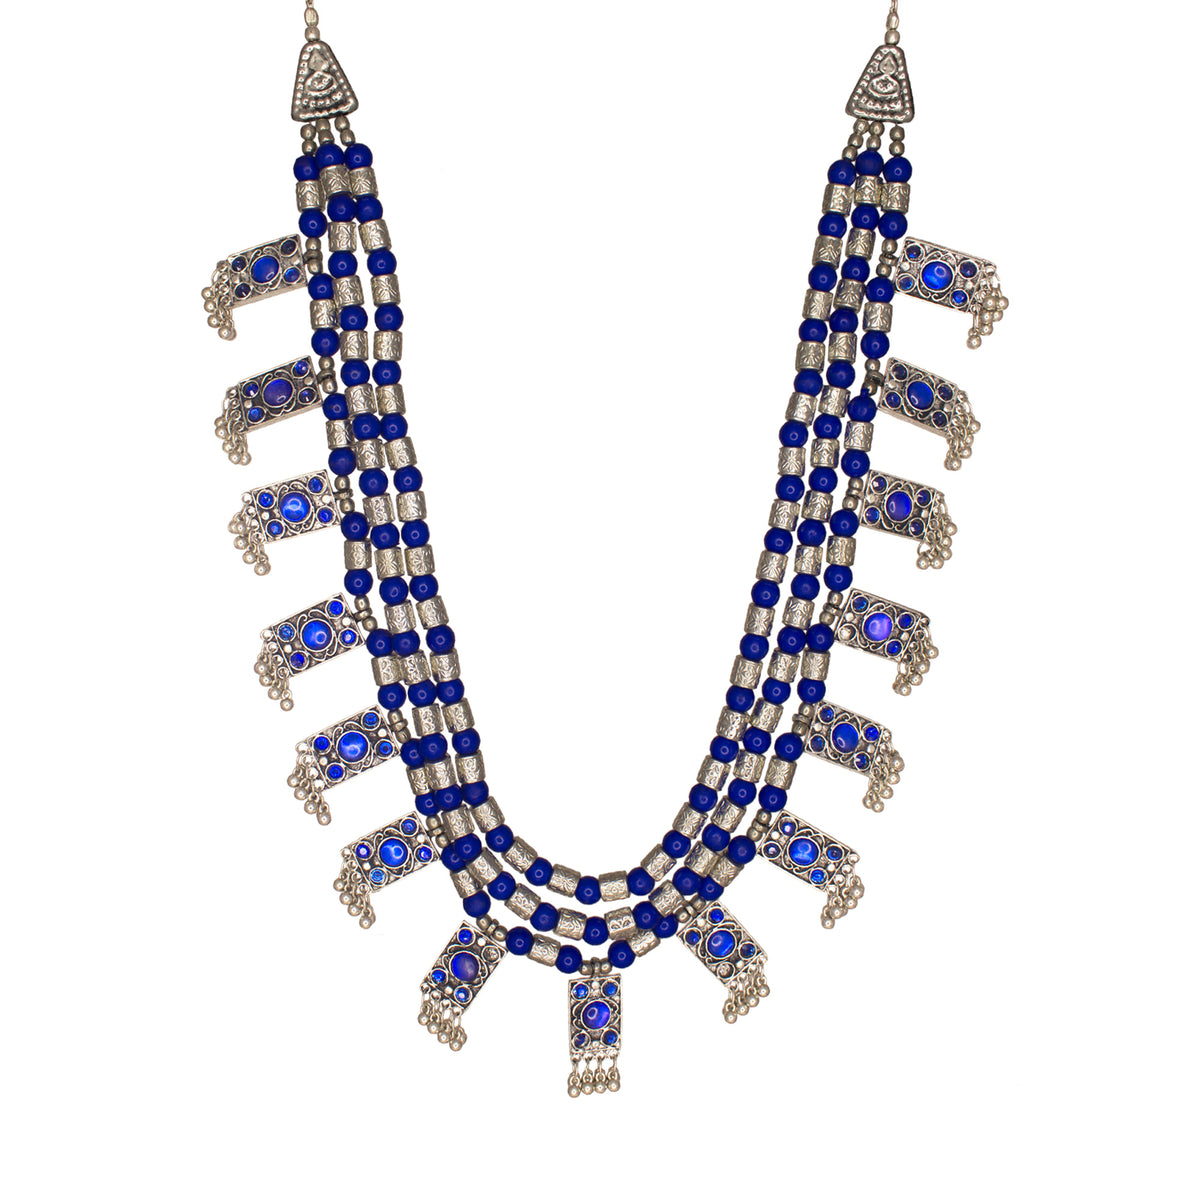 Abhinn Silver Oxidised Handmade Multi-Layer Necklace For Women